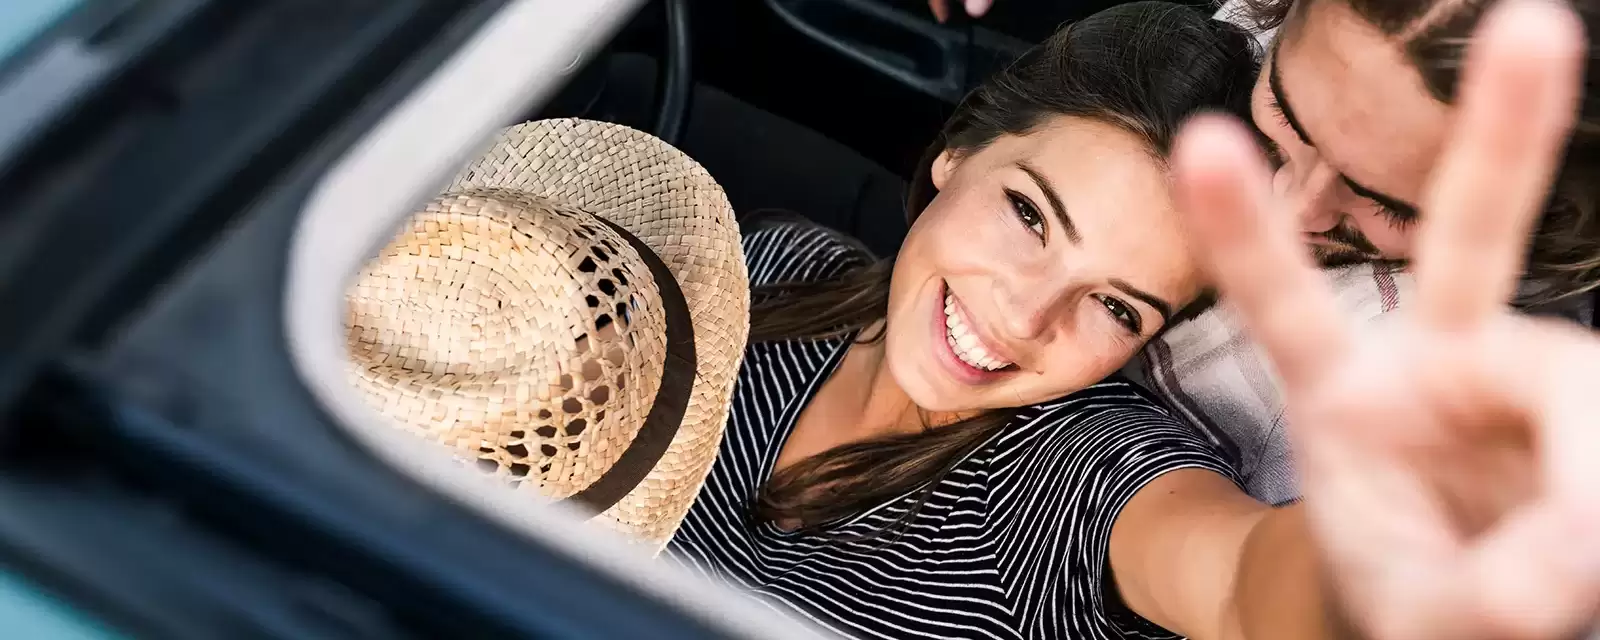 Seguro Volkswagen: imagem foca no rosto da mulher que sorri.